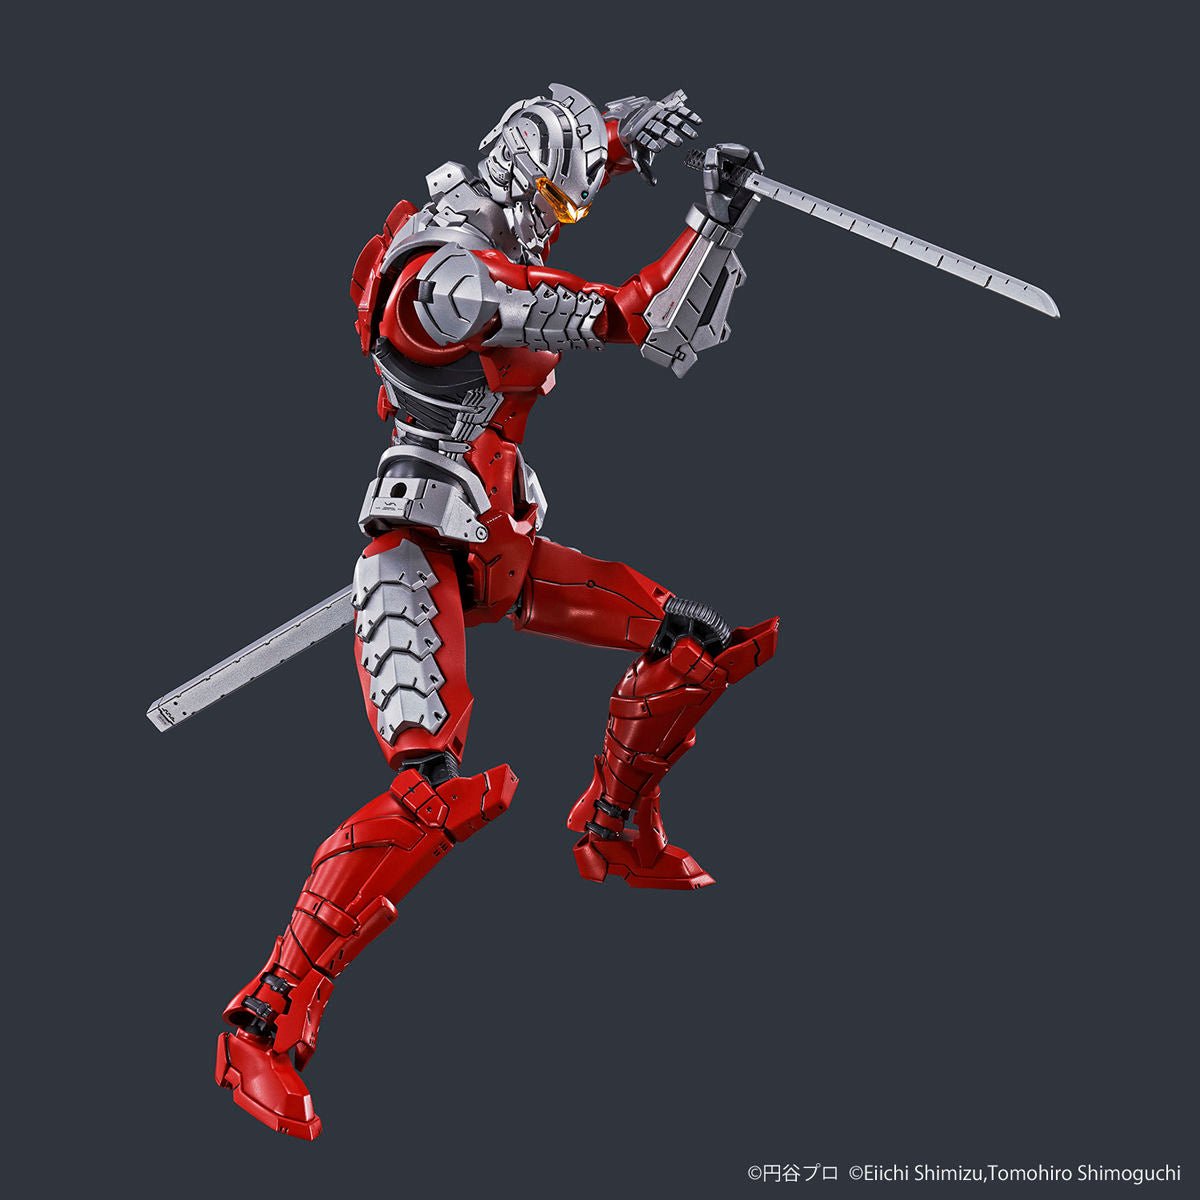 Bandai Figure-rise Standard Ultraman Suit Ver7.5 -Action-